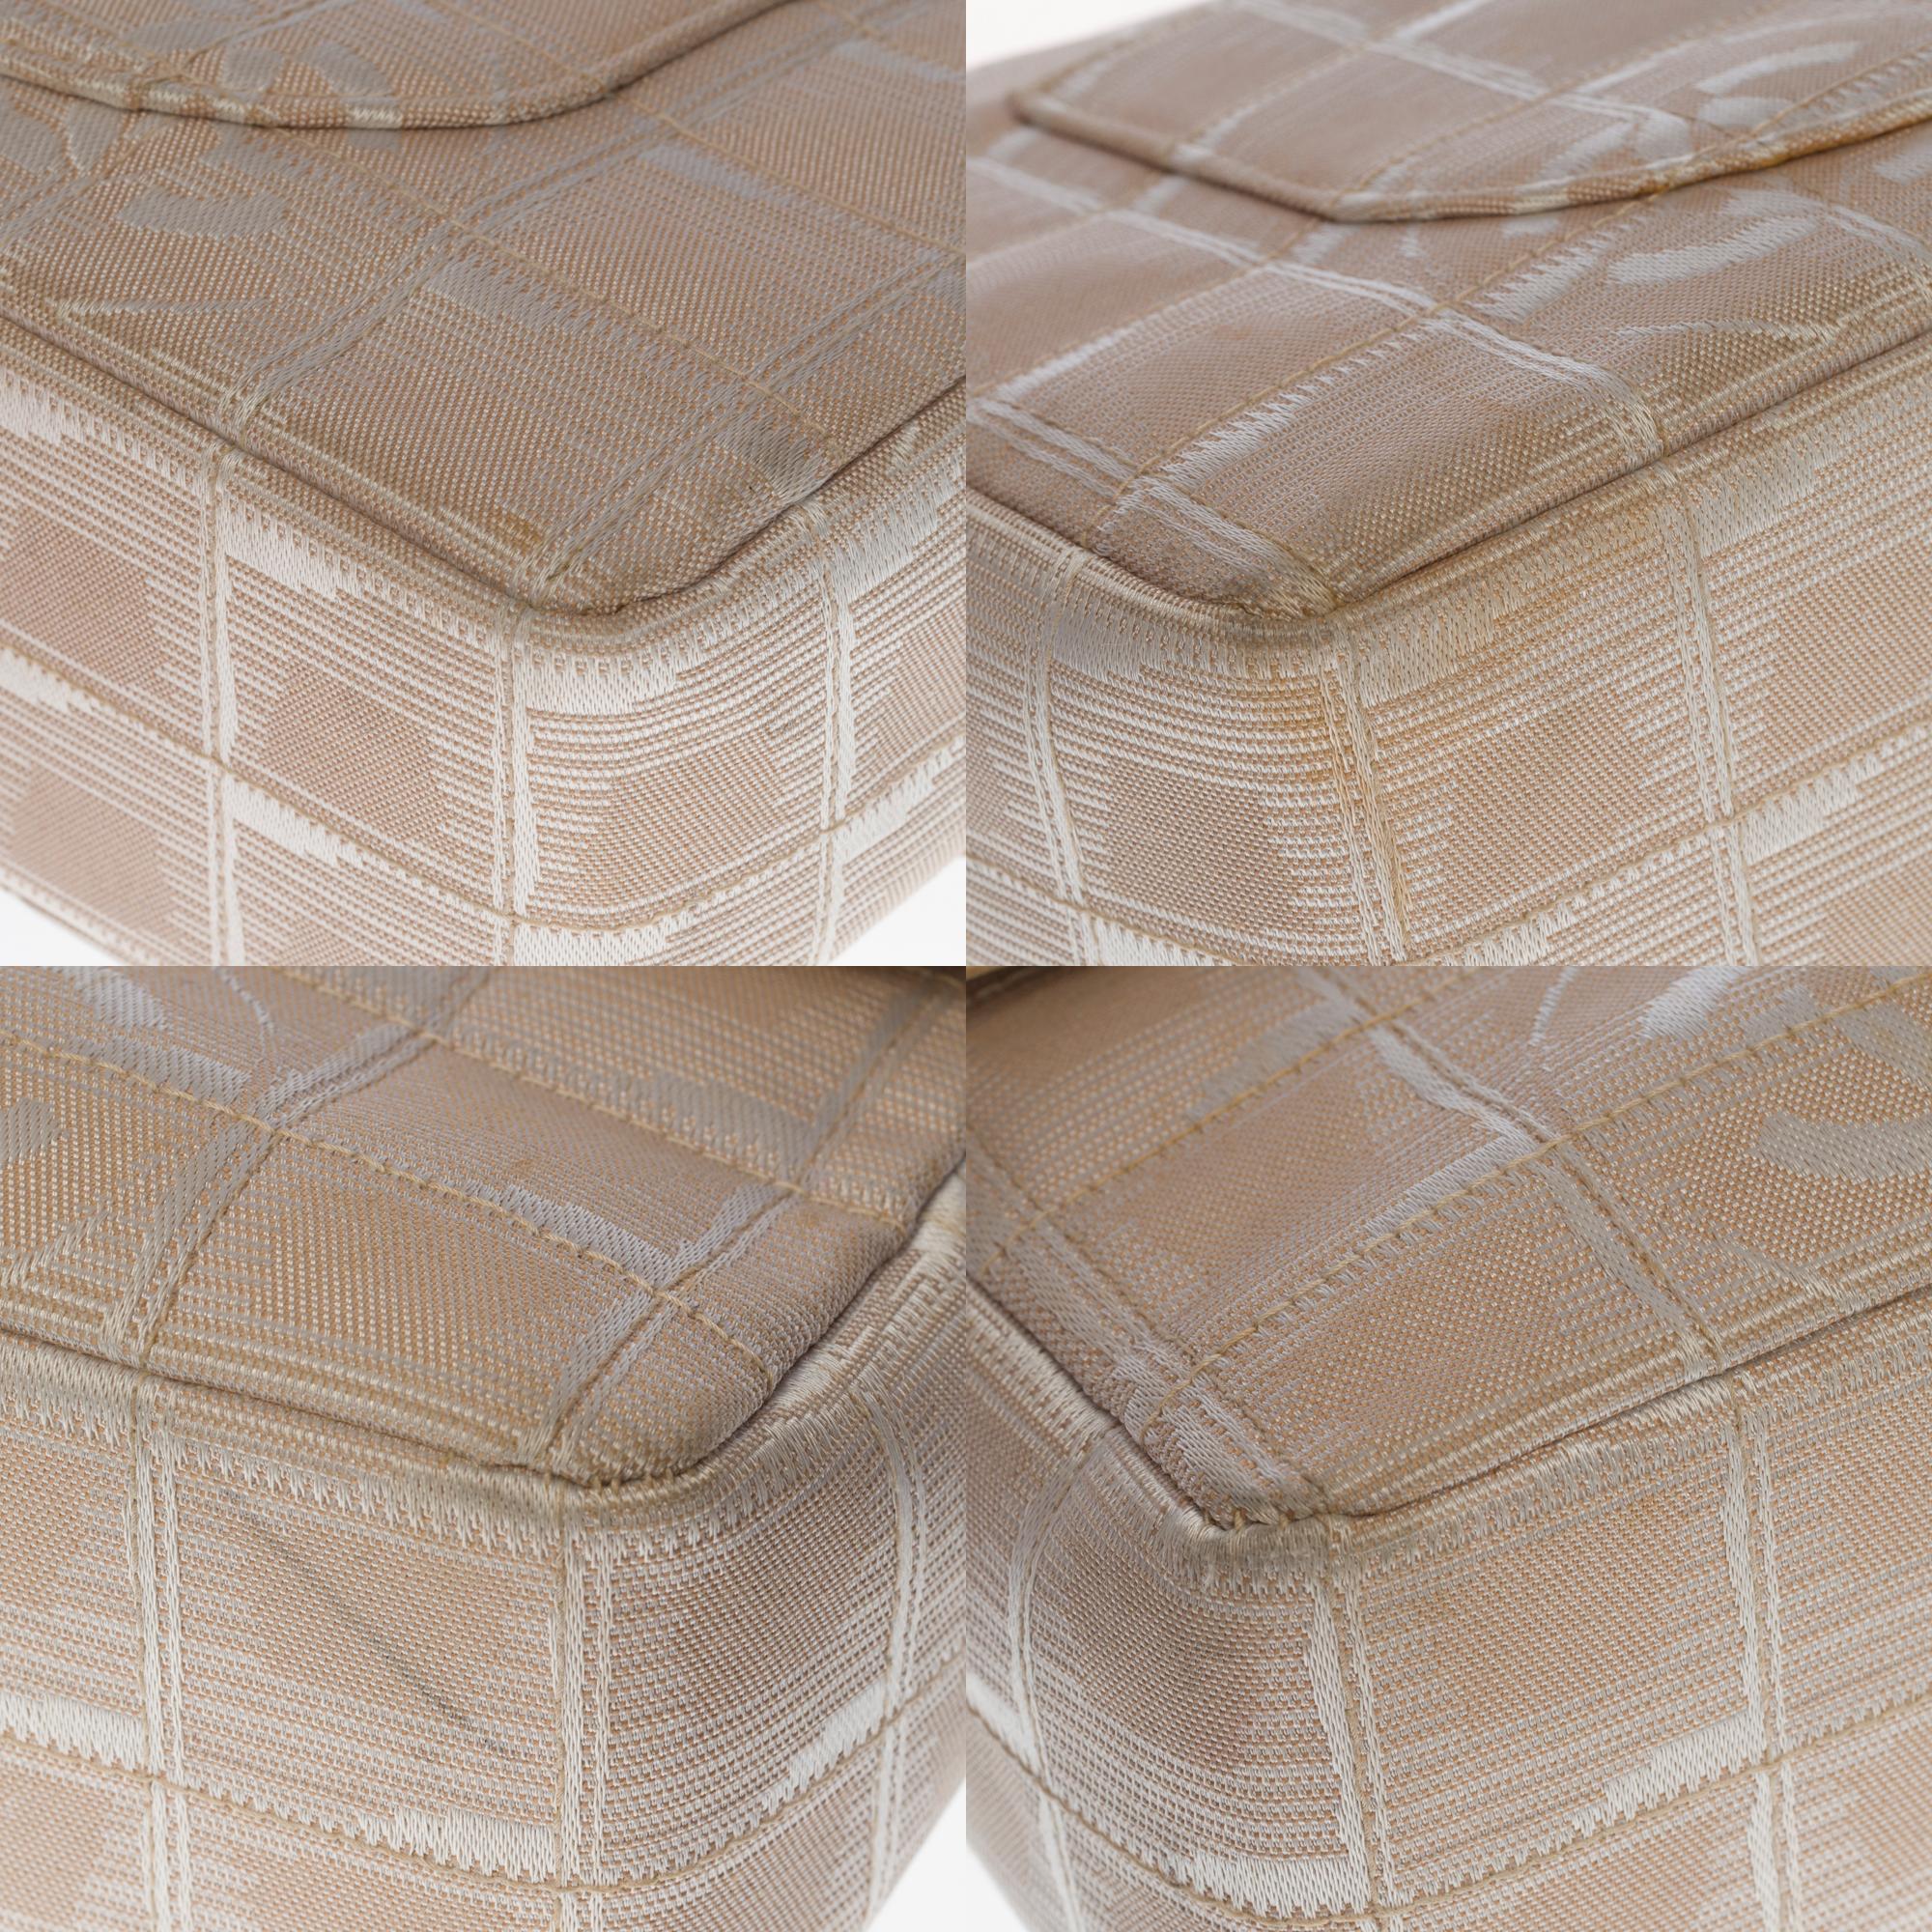 Chanel Timeless Travel Line flap shoulder bag in beige woven nylon, SHW 3